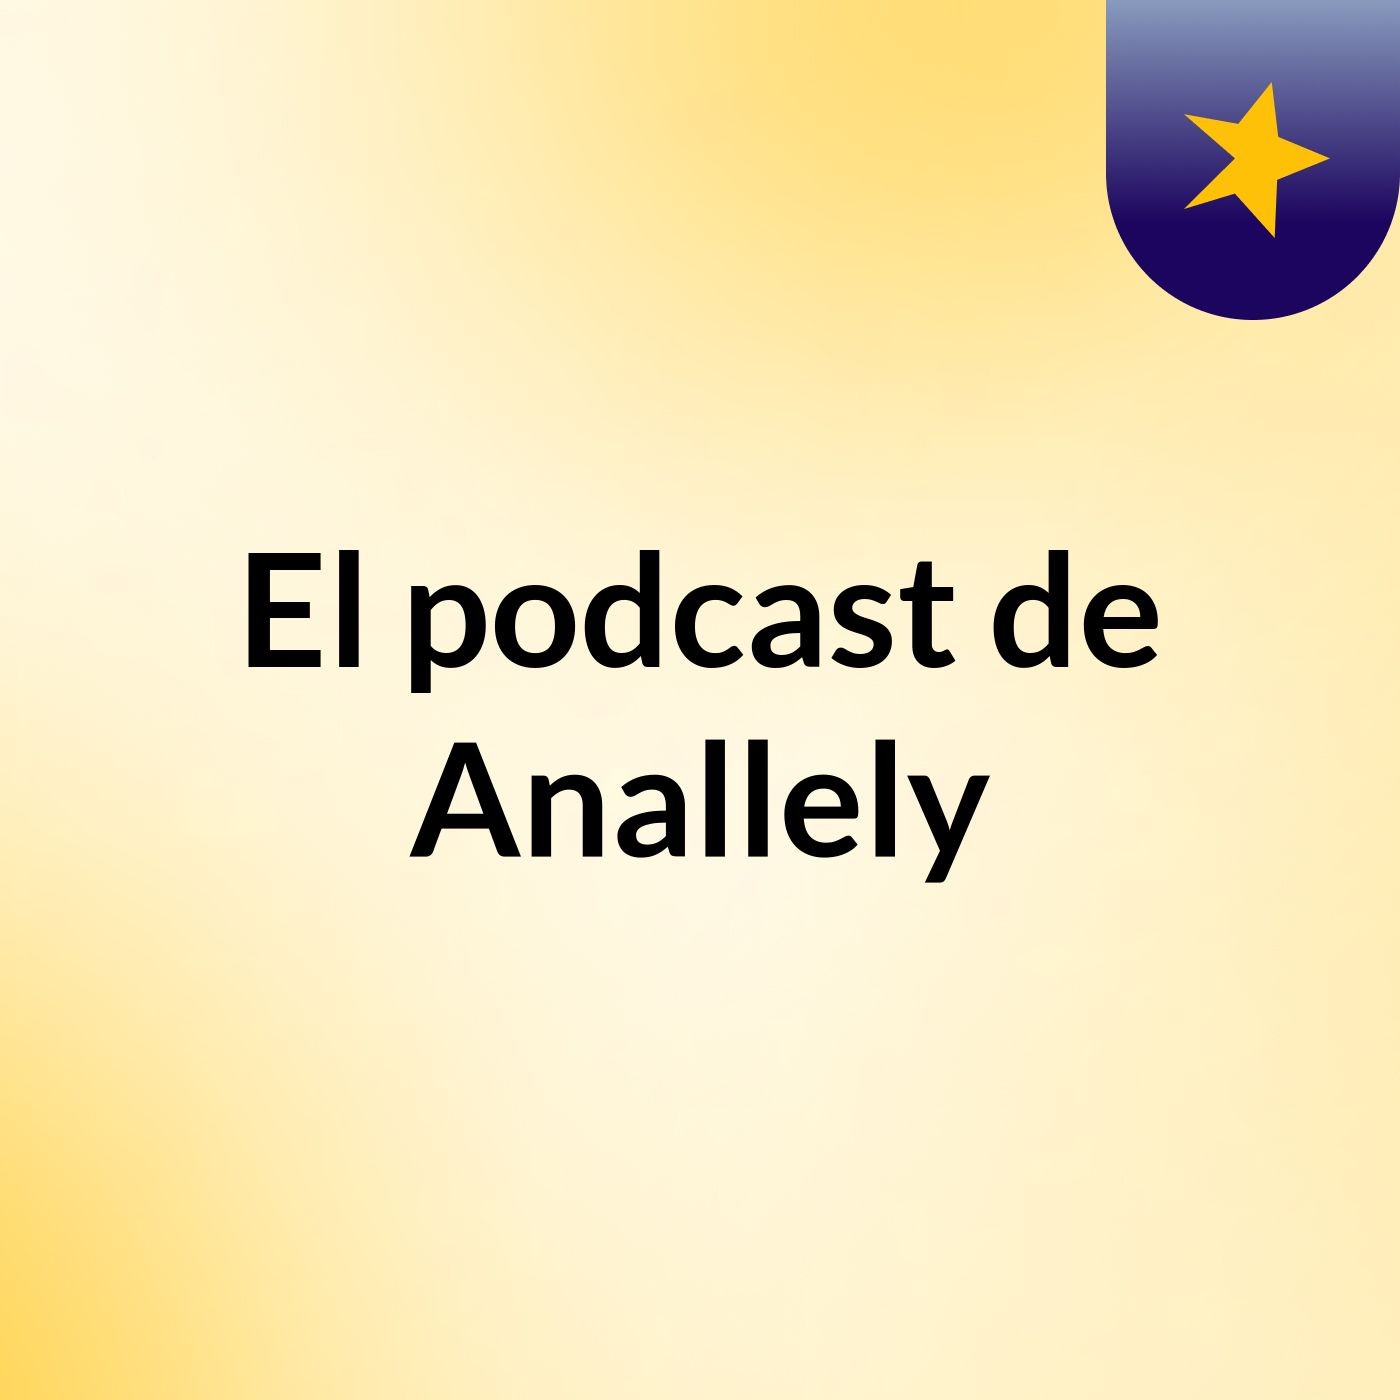 El podcast de Anallely